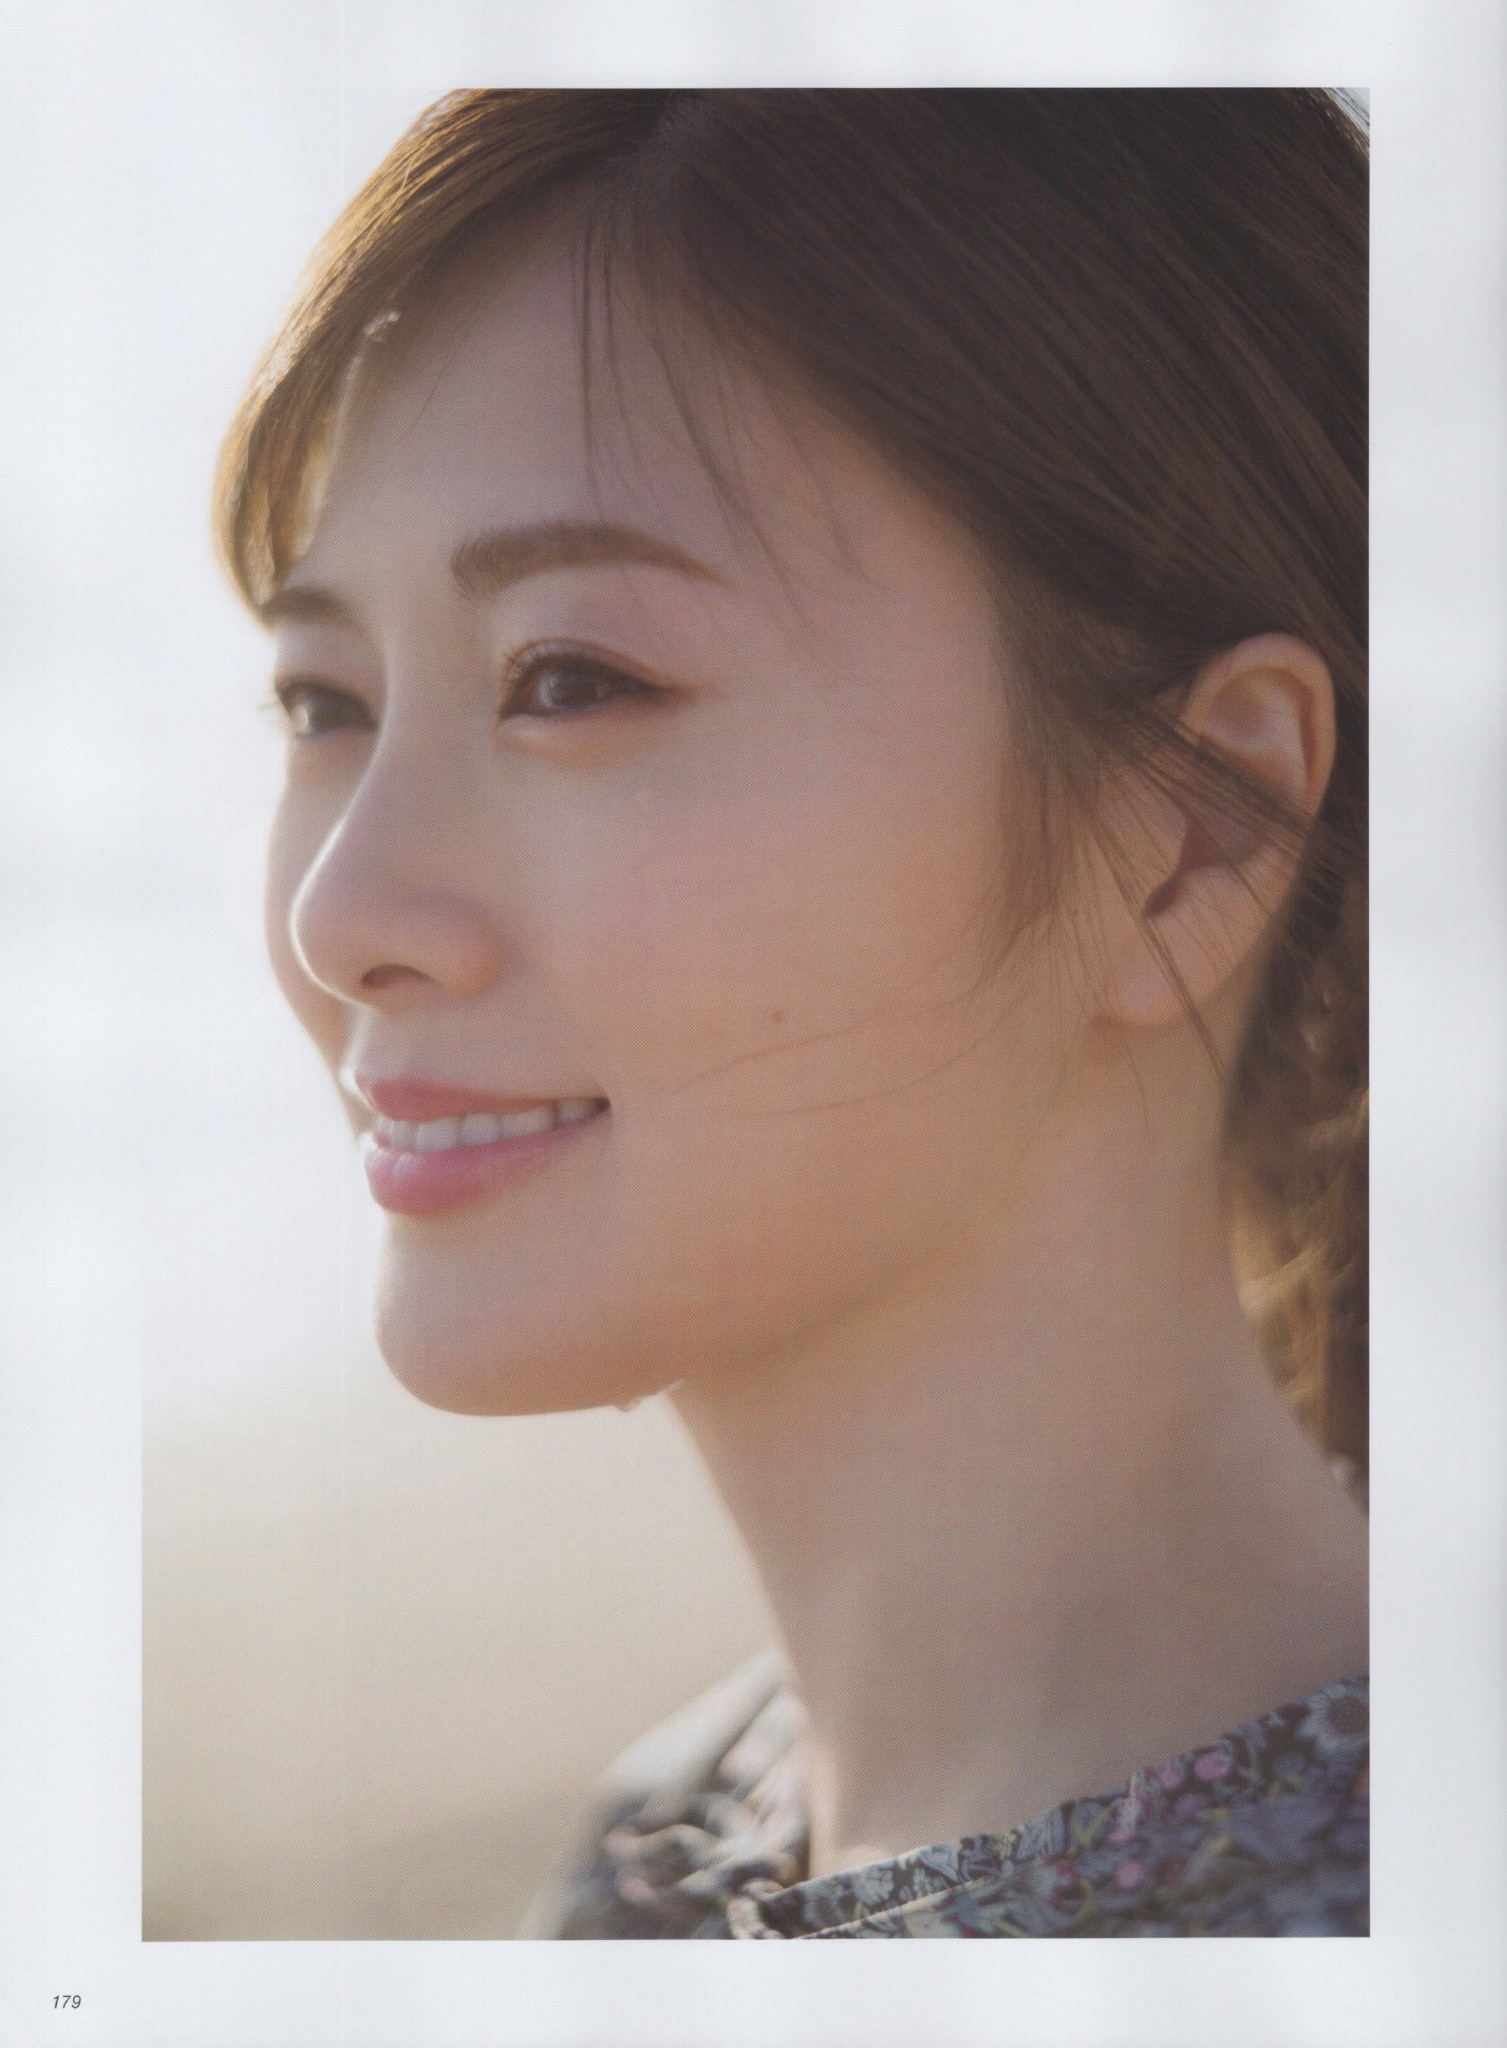 A memorial book of Mai Shiraishi, who graduates from Nogizaka46 in October 2020